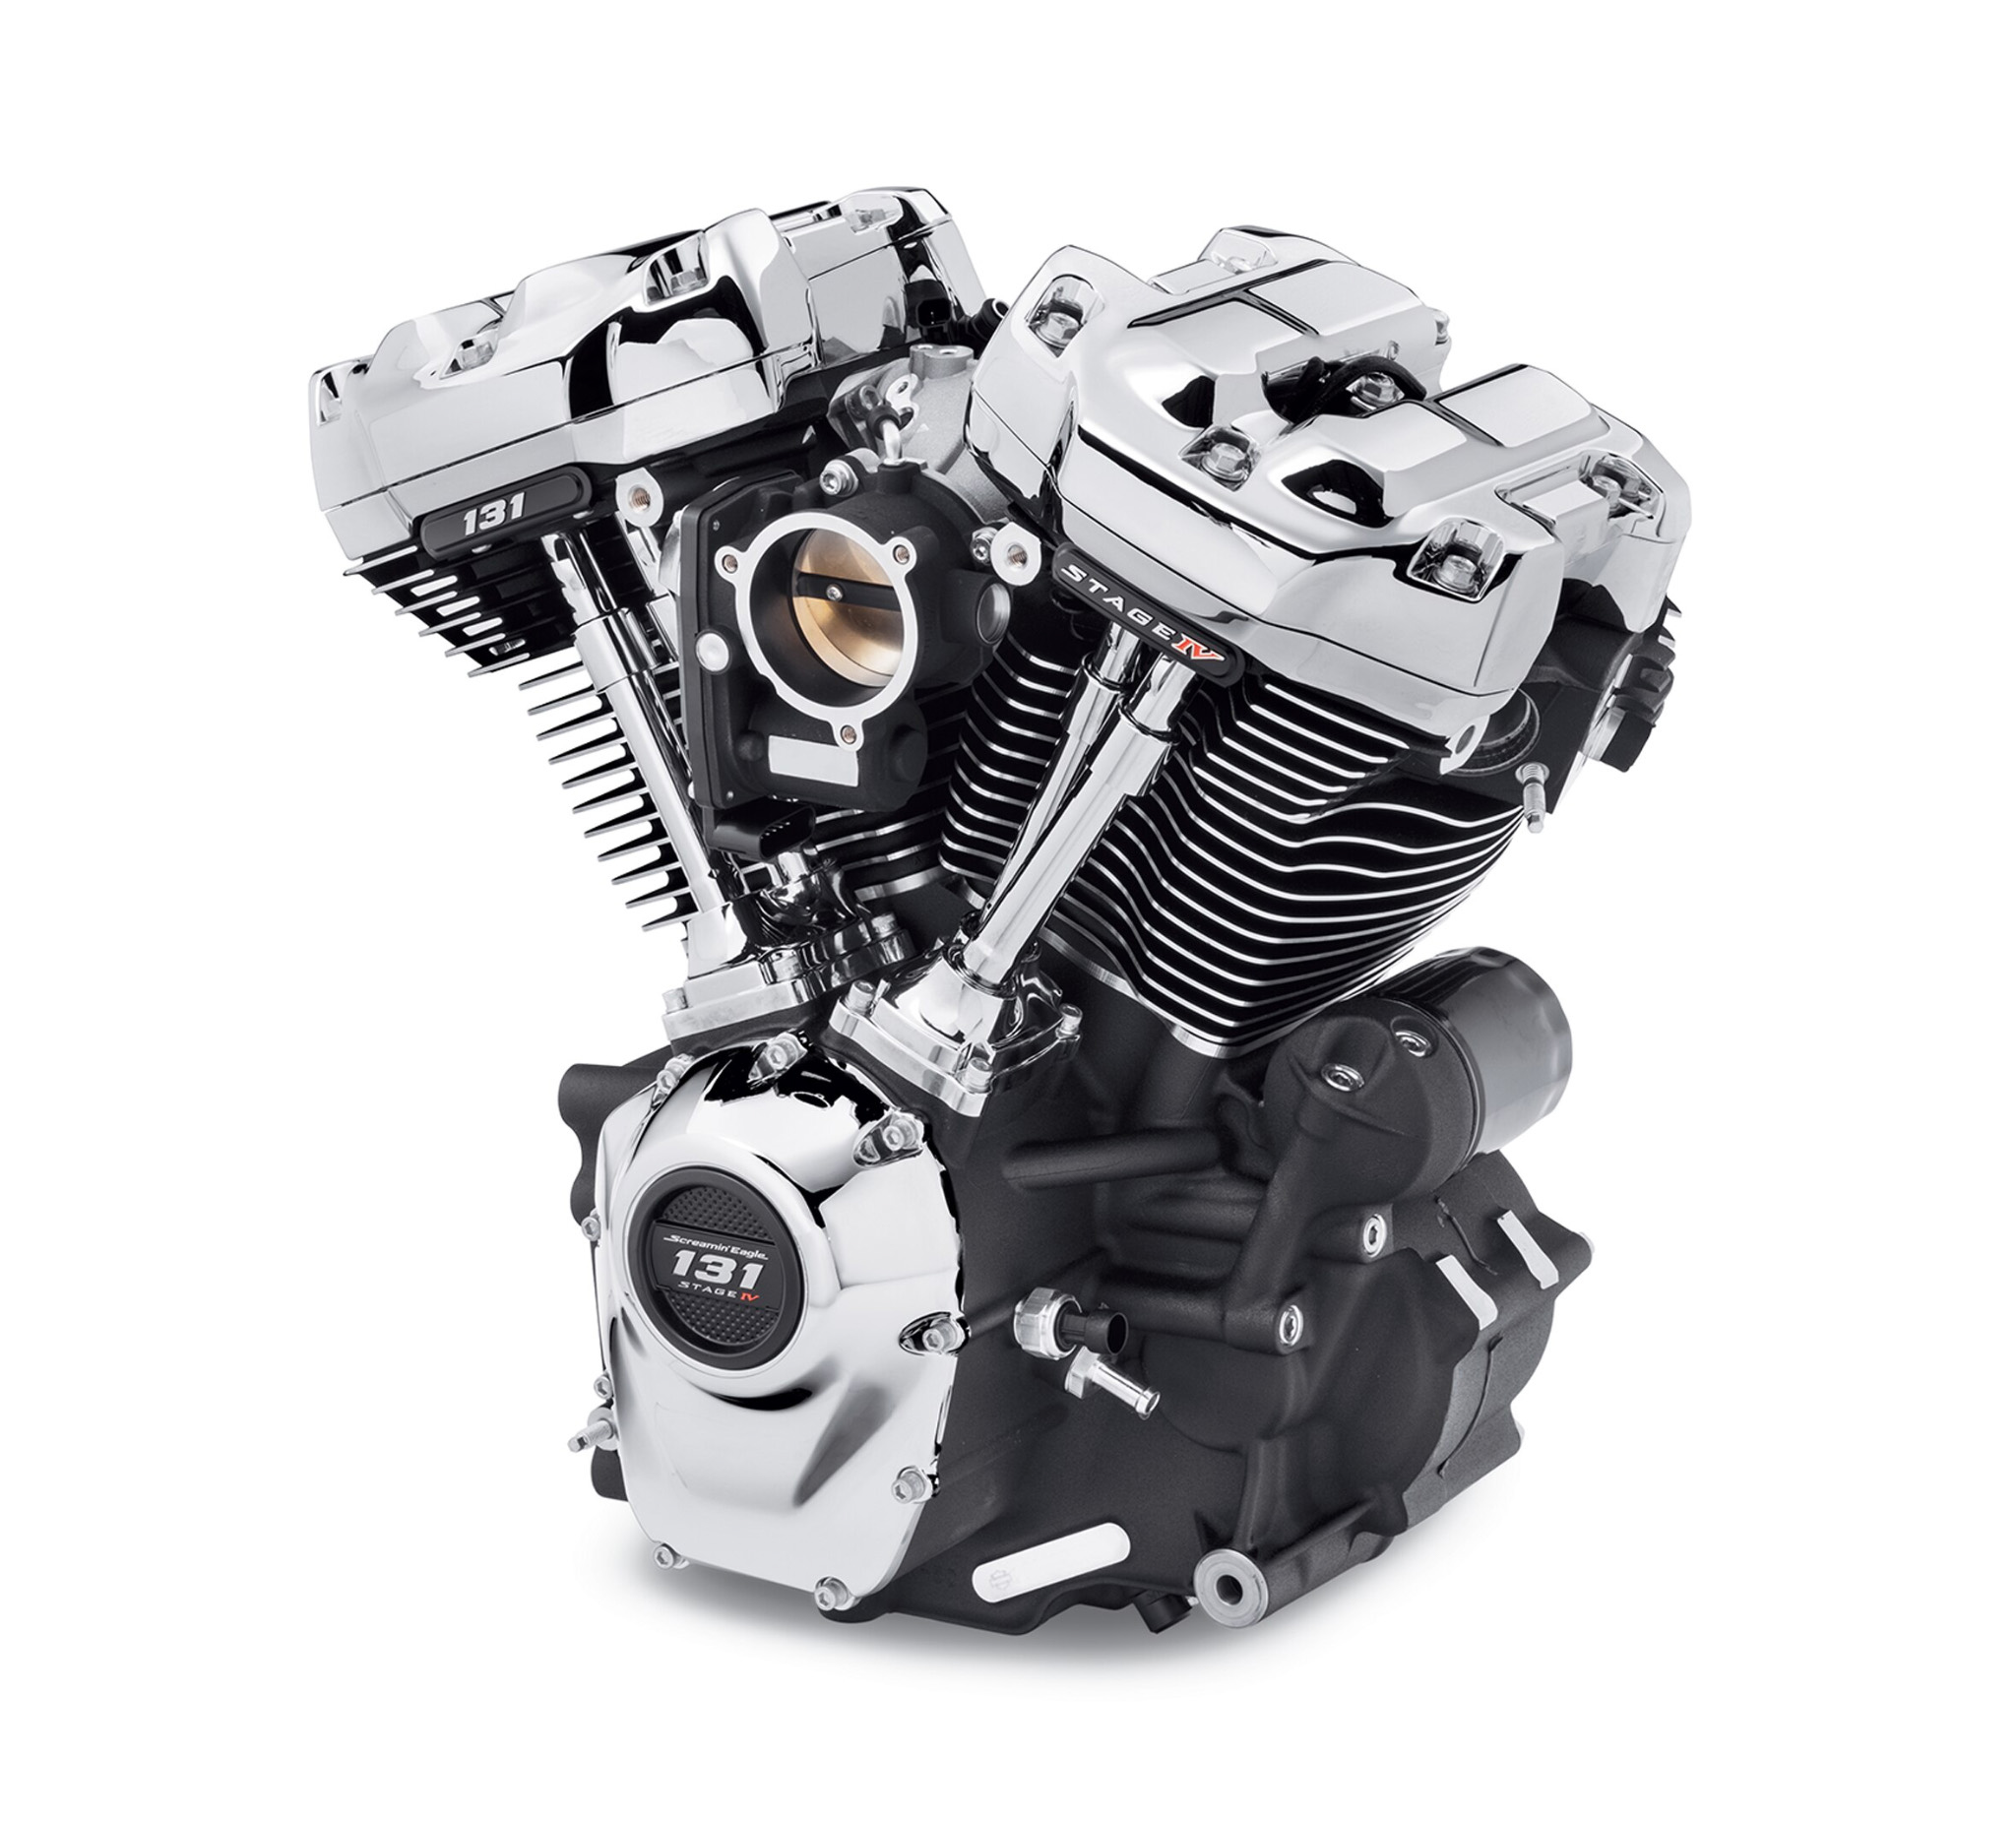 Screamin Eagle Milwaukee Eight 131 Performance Crate Engine Oil Cooled 16200339 Harley Davidson Usa